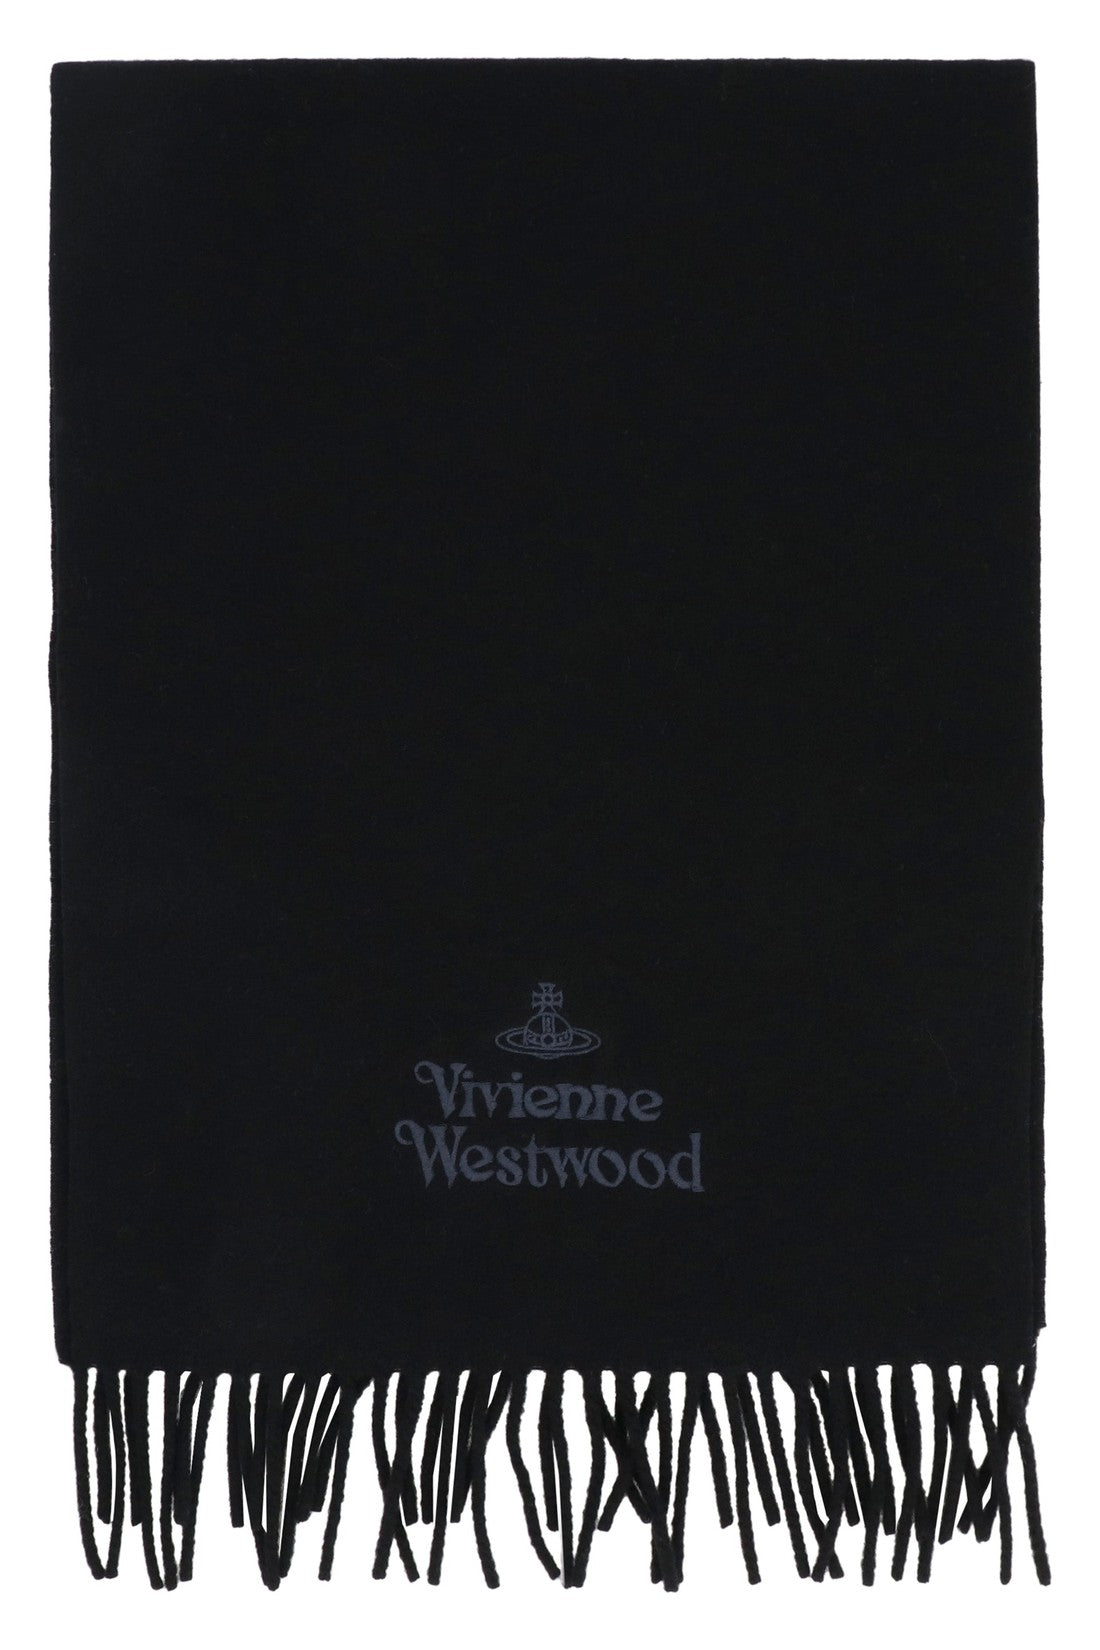 Vivienne Westwood-OUTLET-SALE-Wool scarf-ARCHIVIST